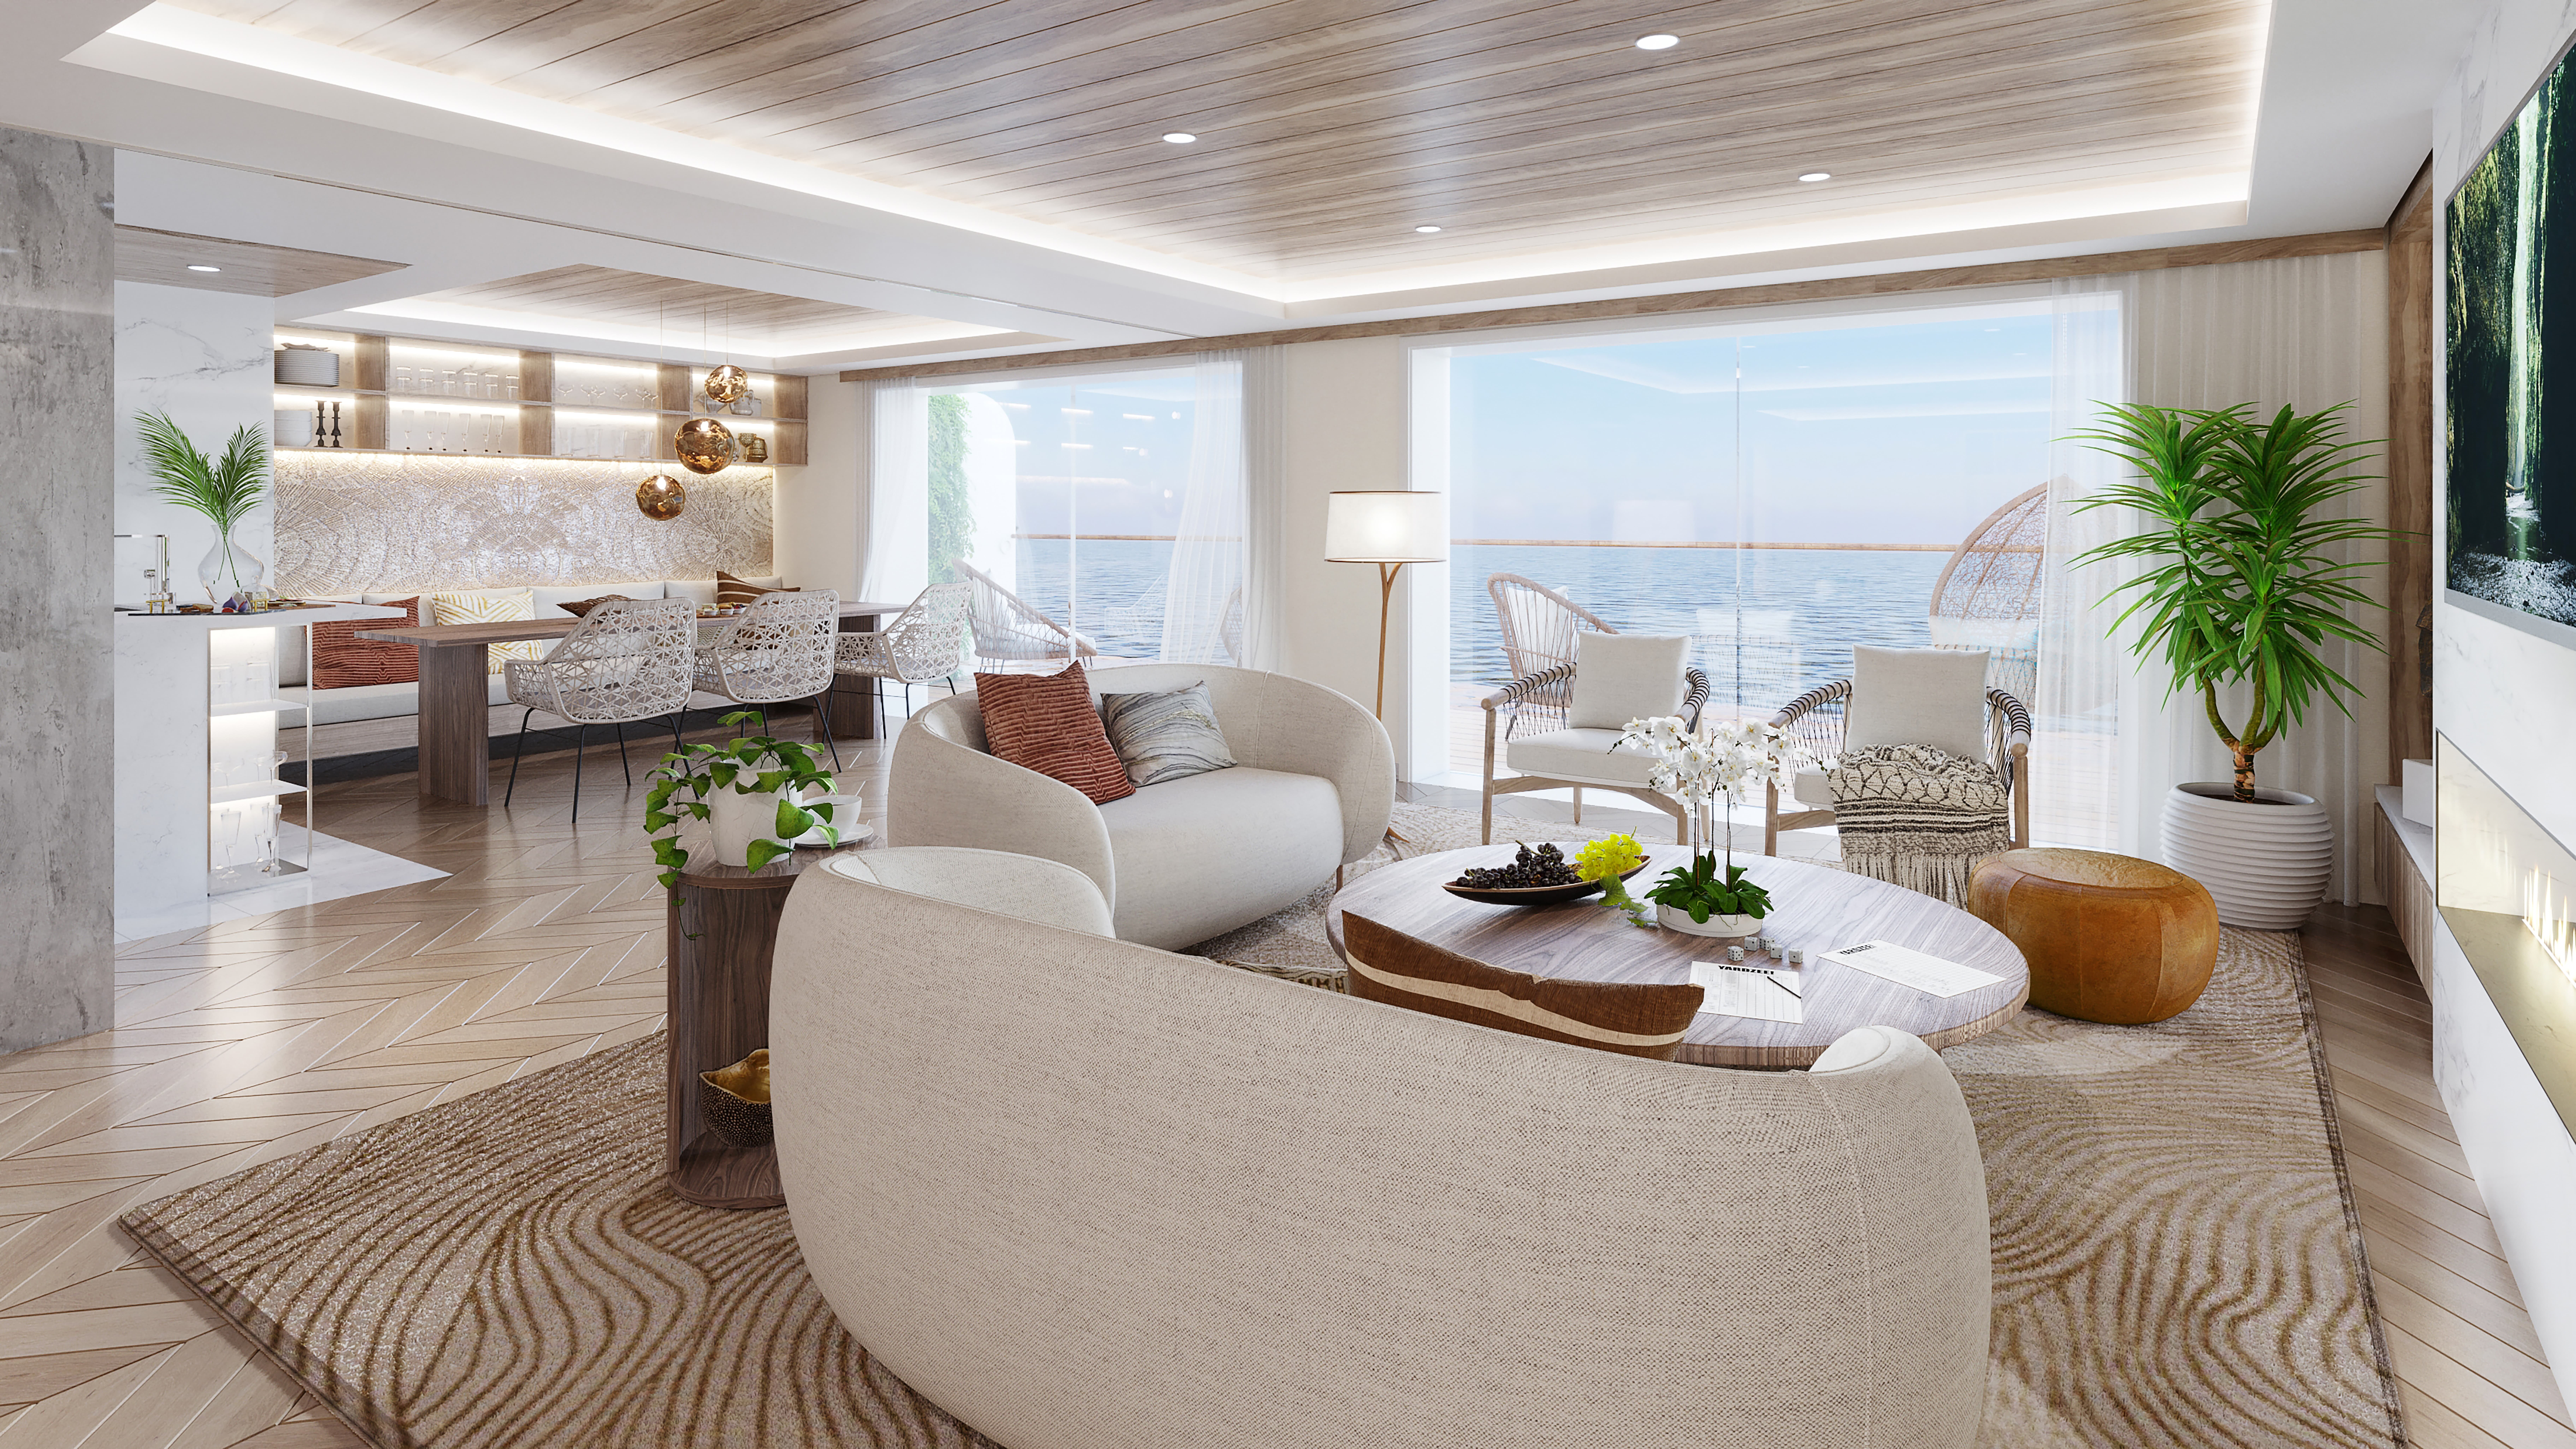 Storylines resident lounge designed for cruise ship retirement living